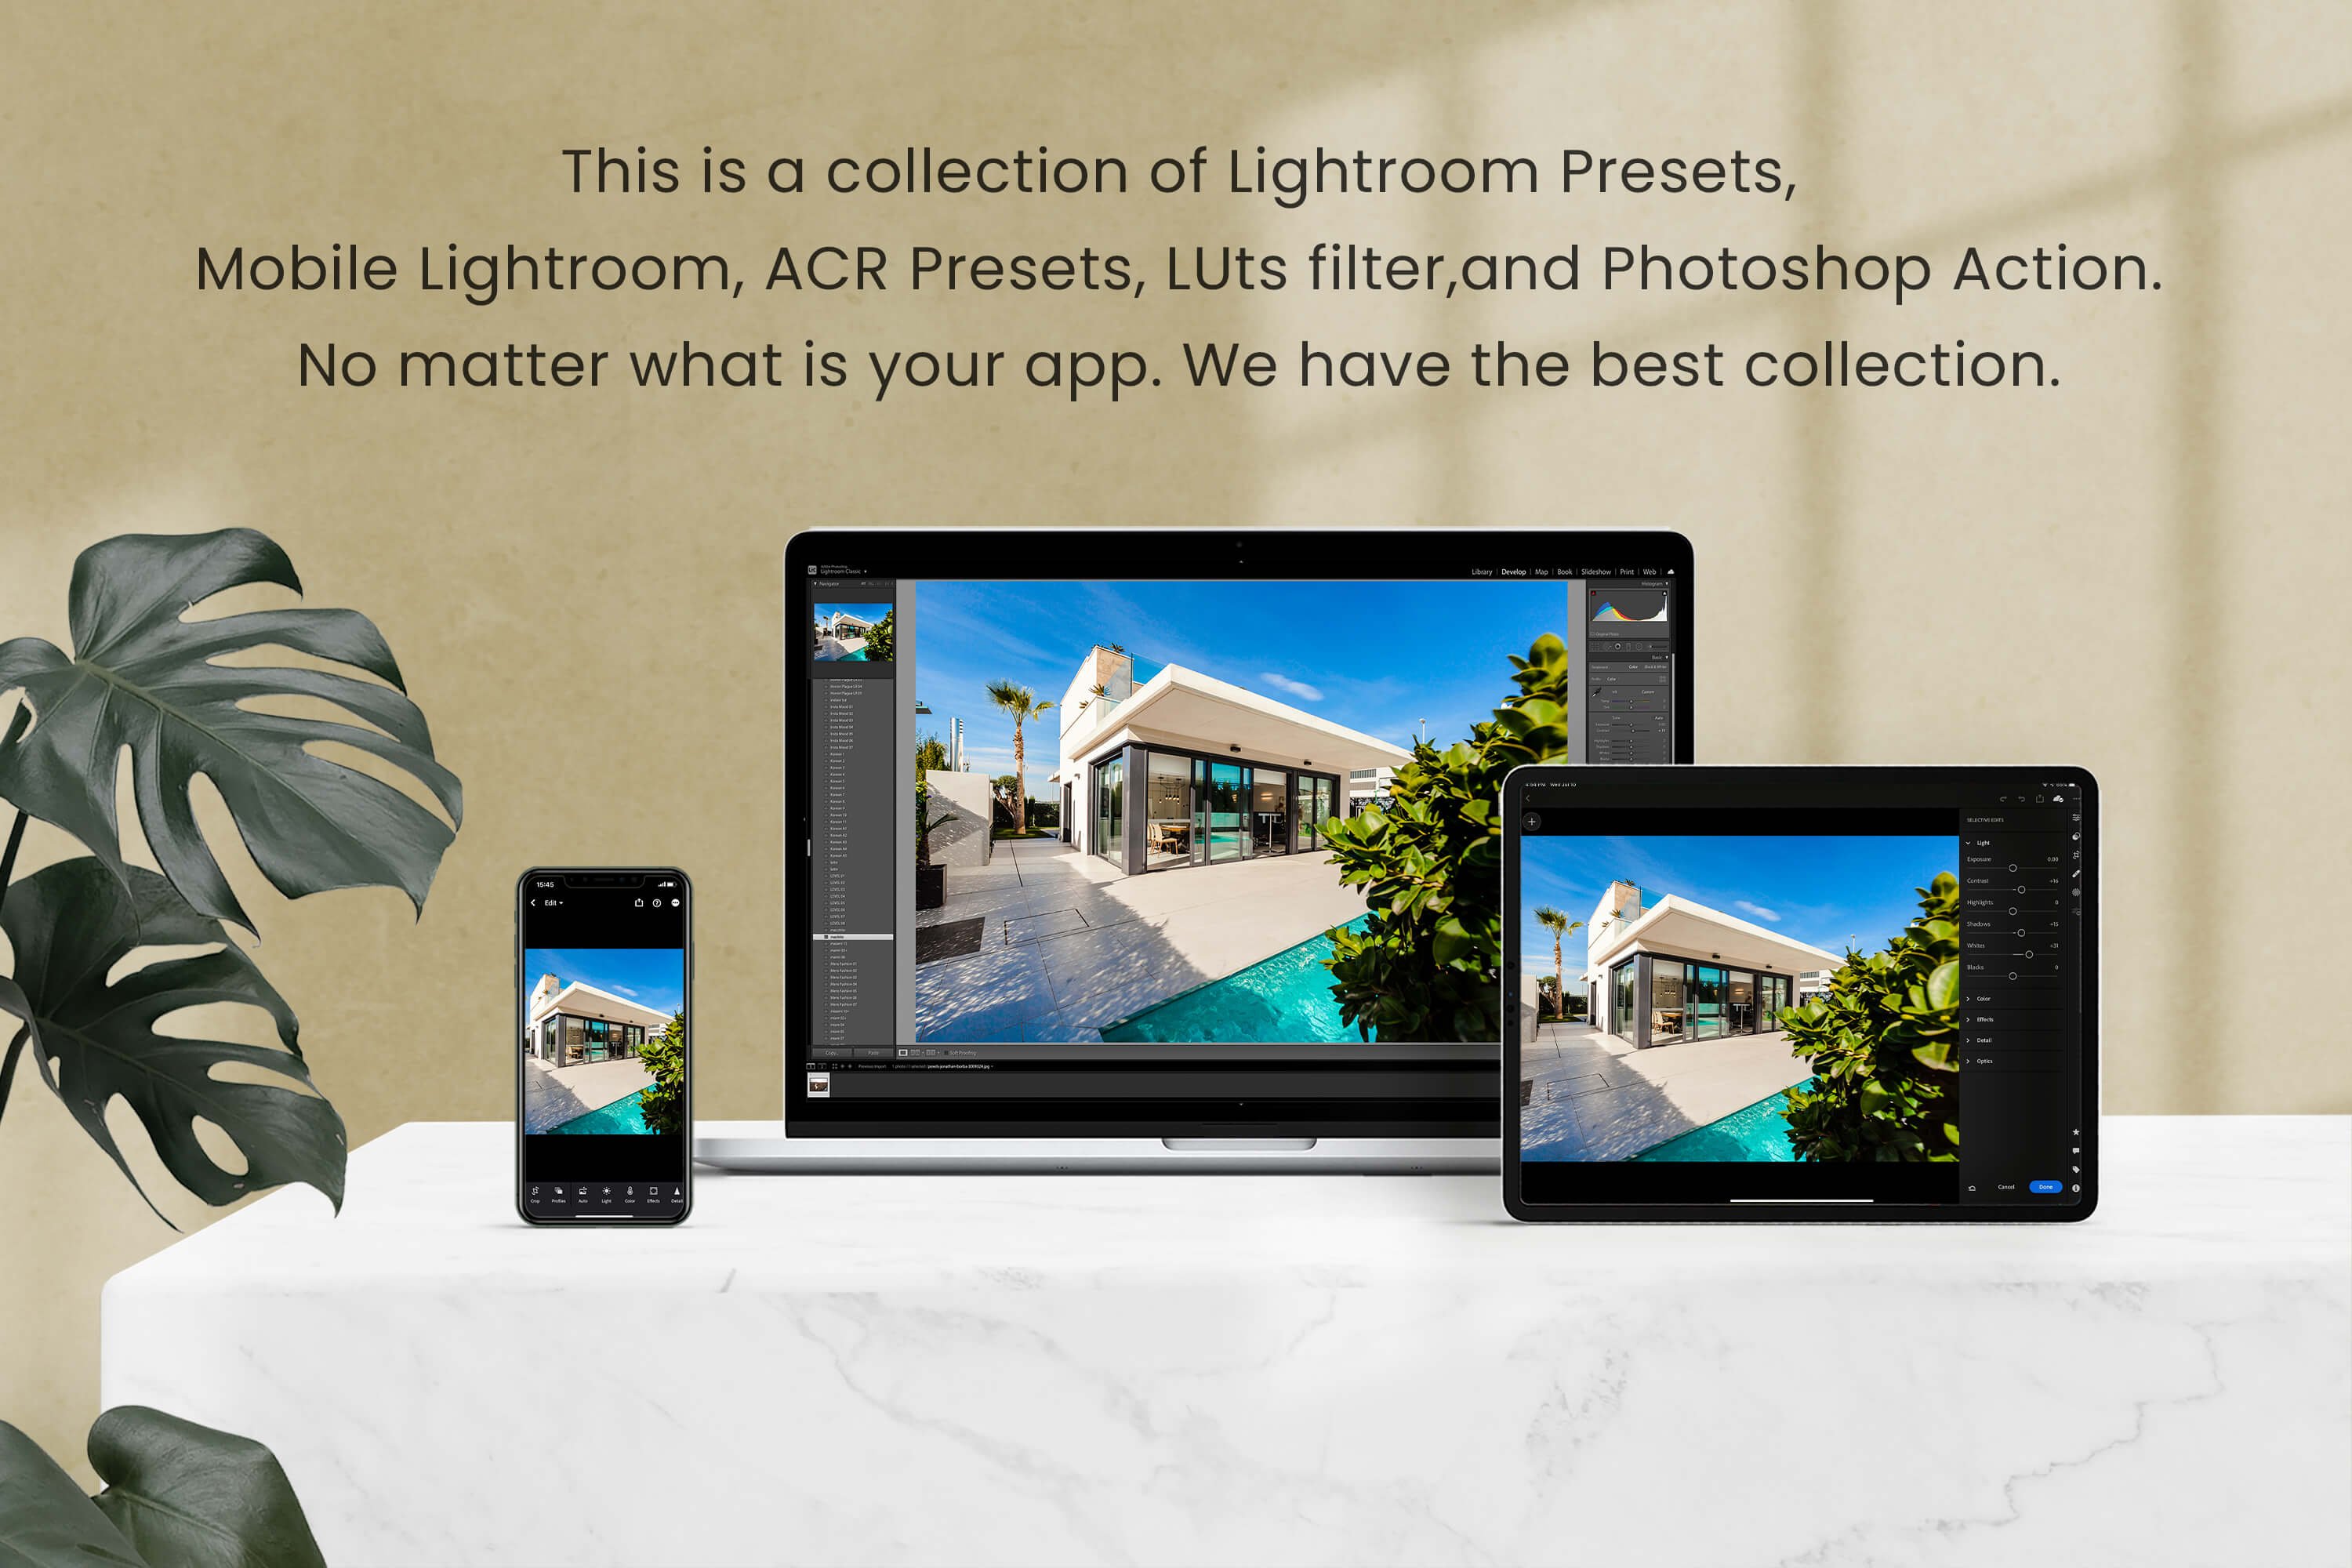 Real Estate Lightroom Photoshop LUTspreview image.